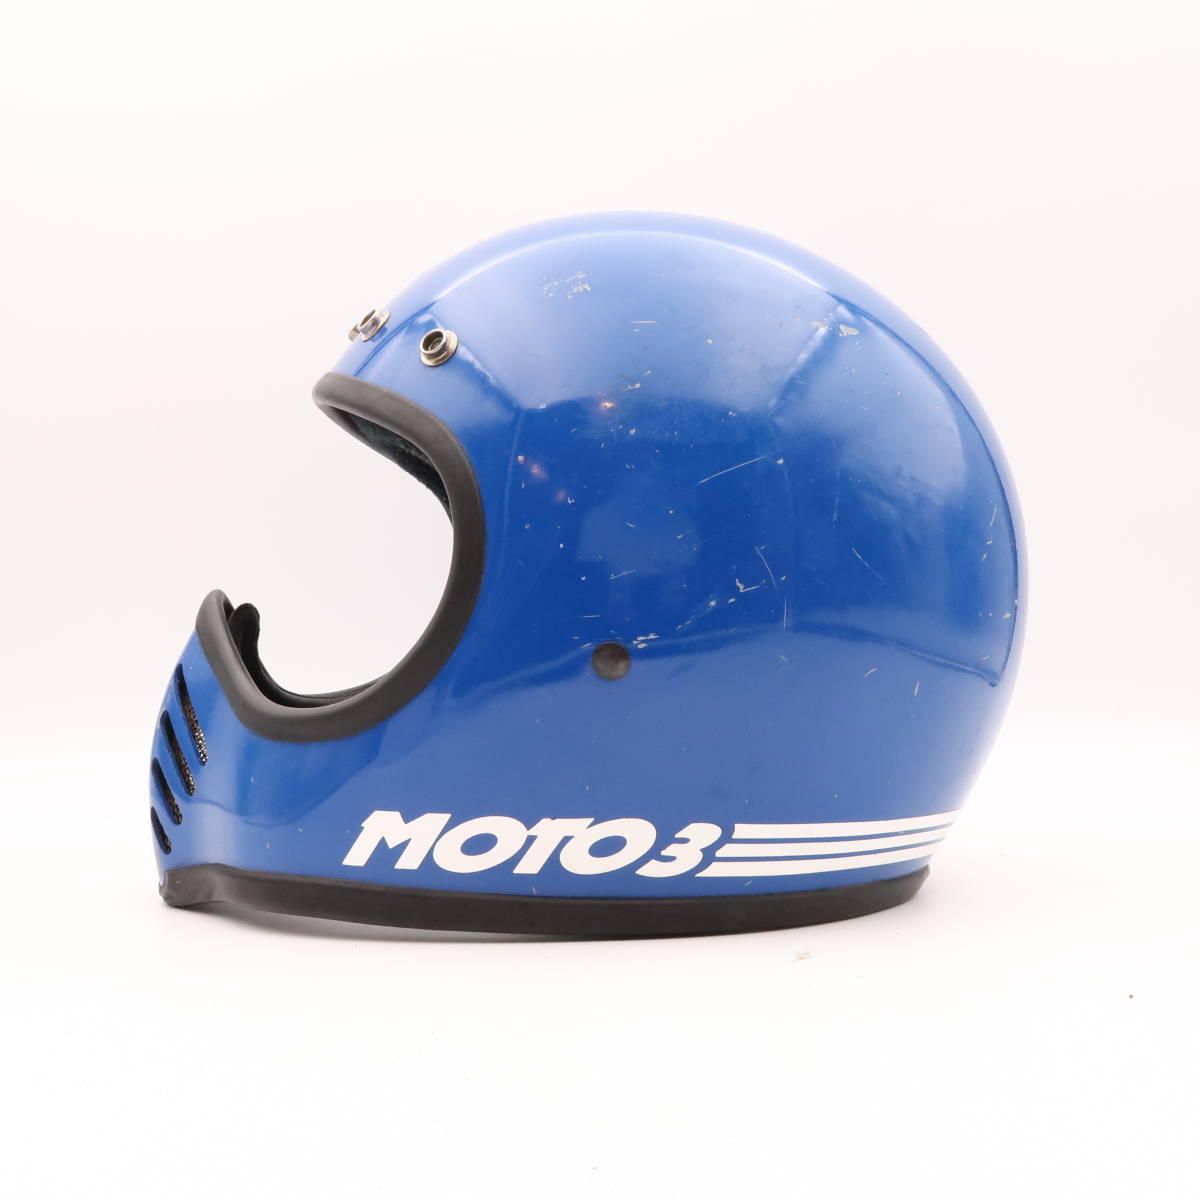 M shell bell moto 3.58cm repair necessity that time thing America motocross vmx mx maxson griffin mini 500tx vintage helmet 